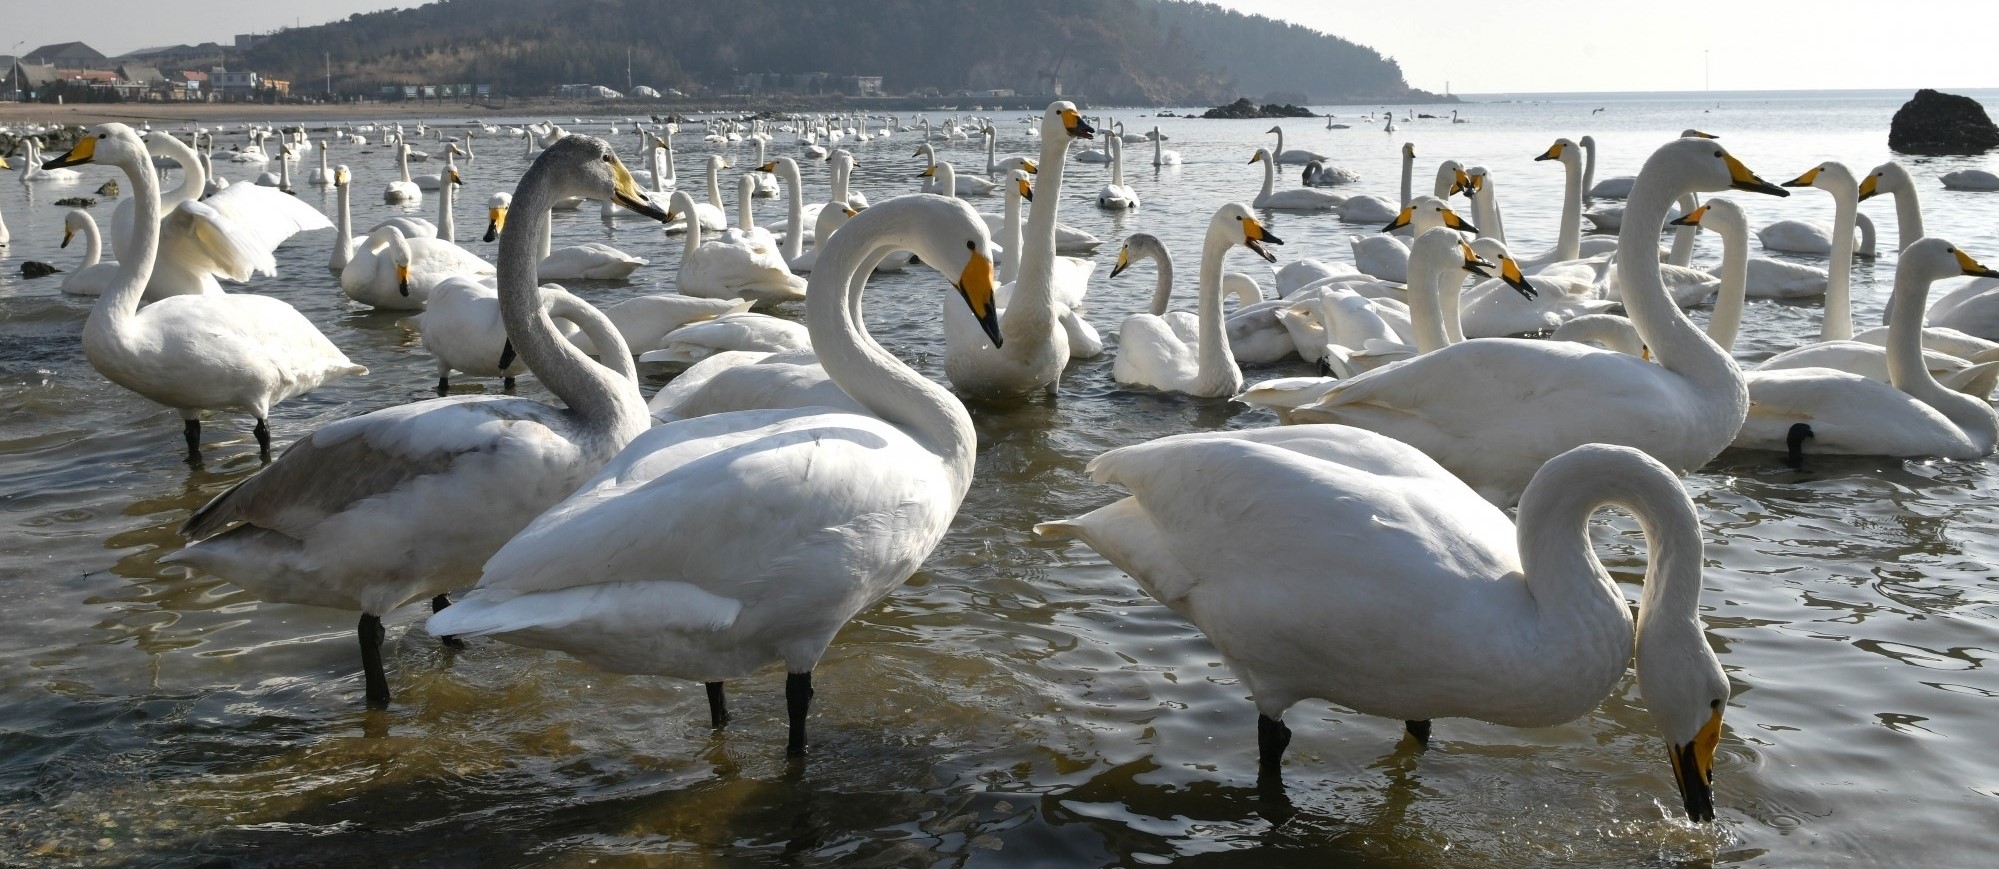 Bird flu hits swans in China's Xinjiang region - ministry